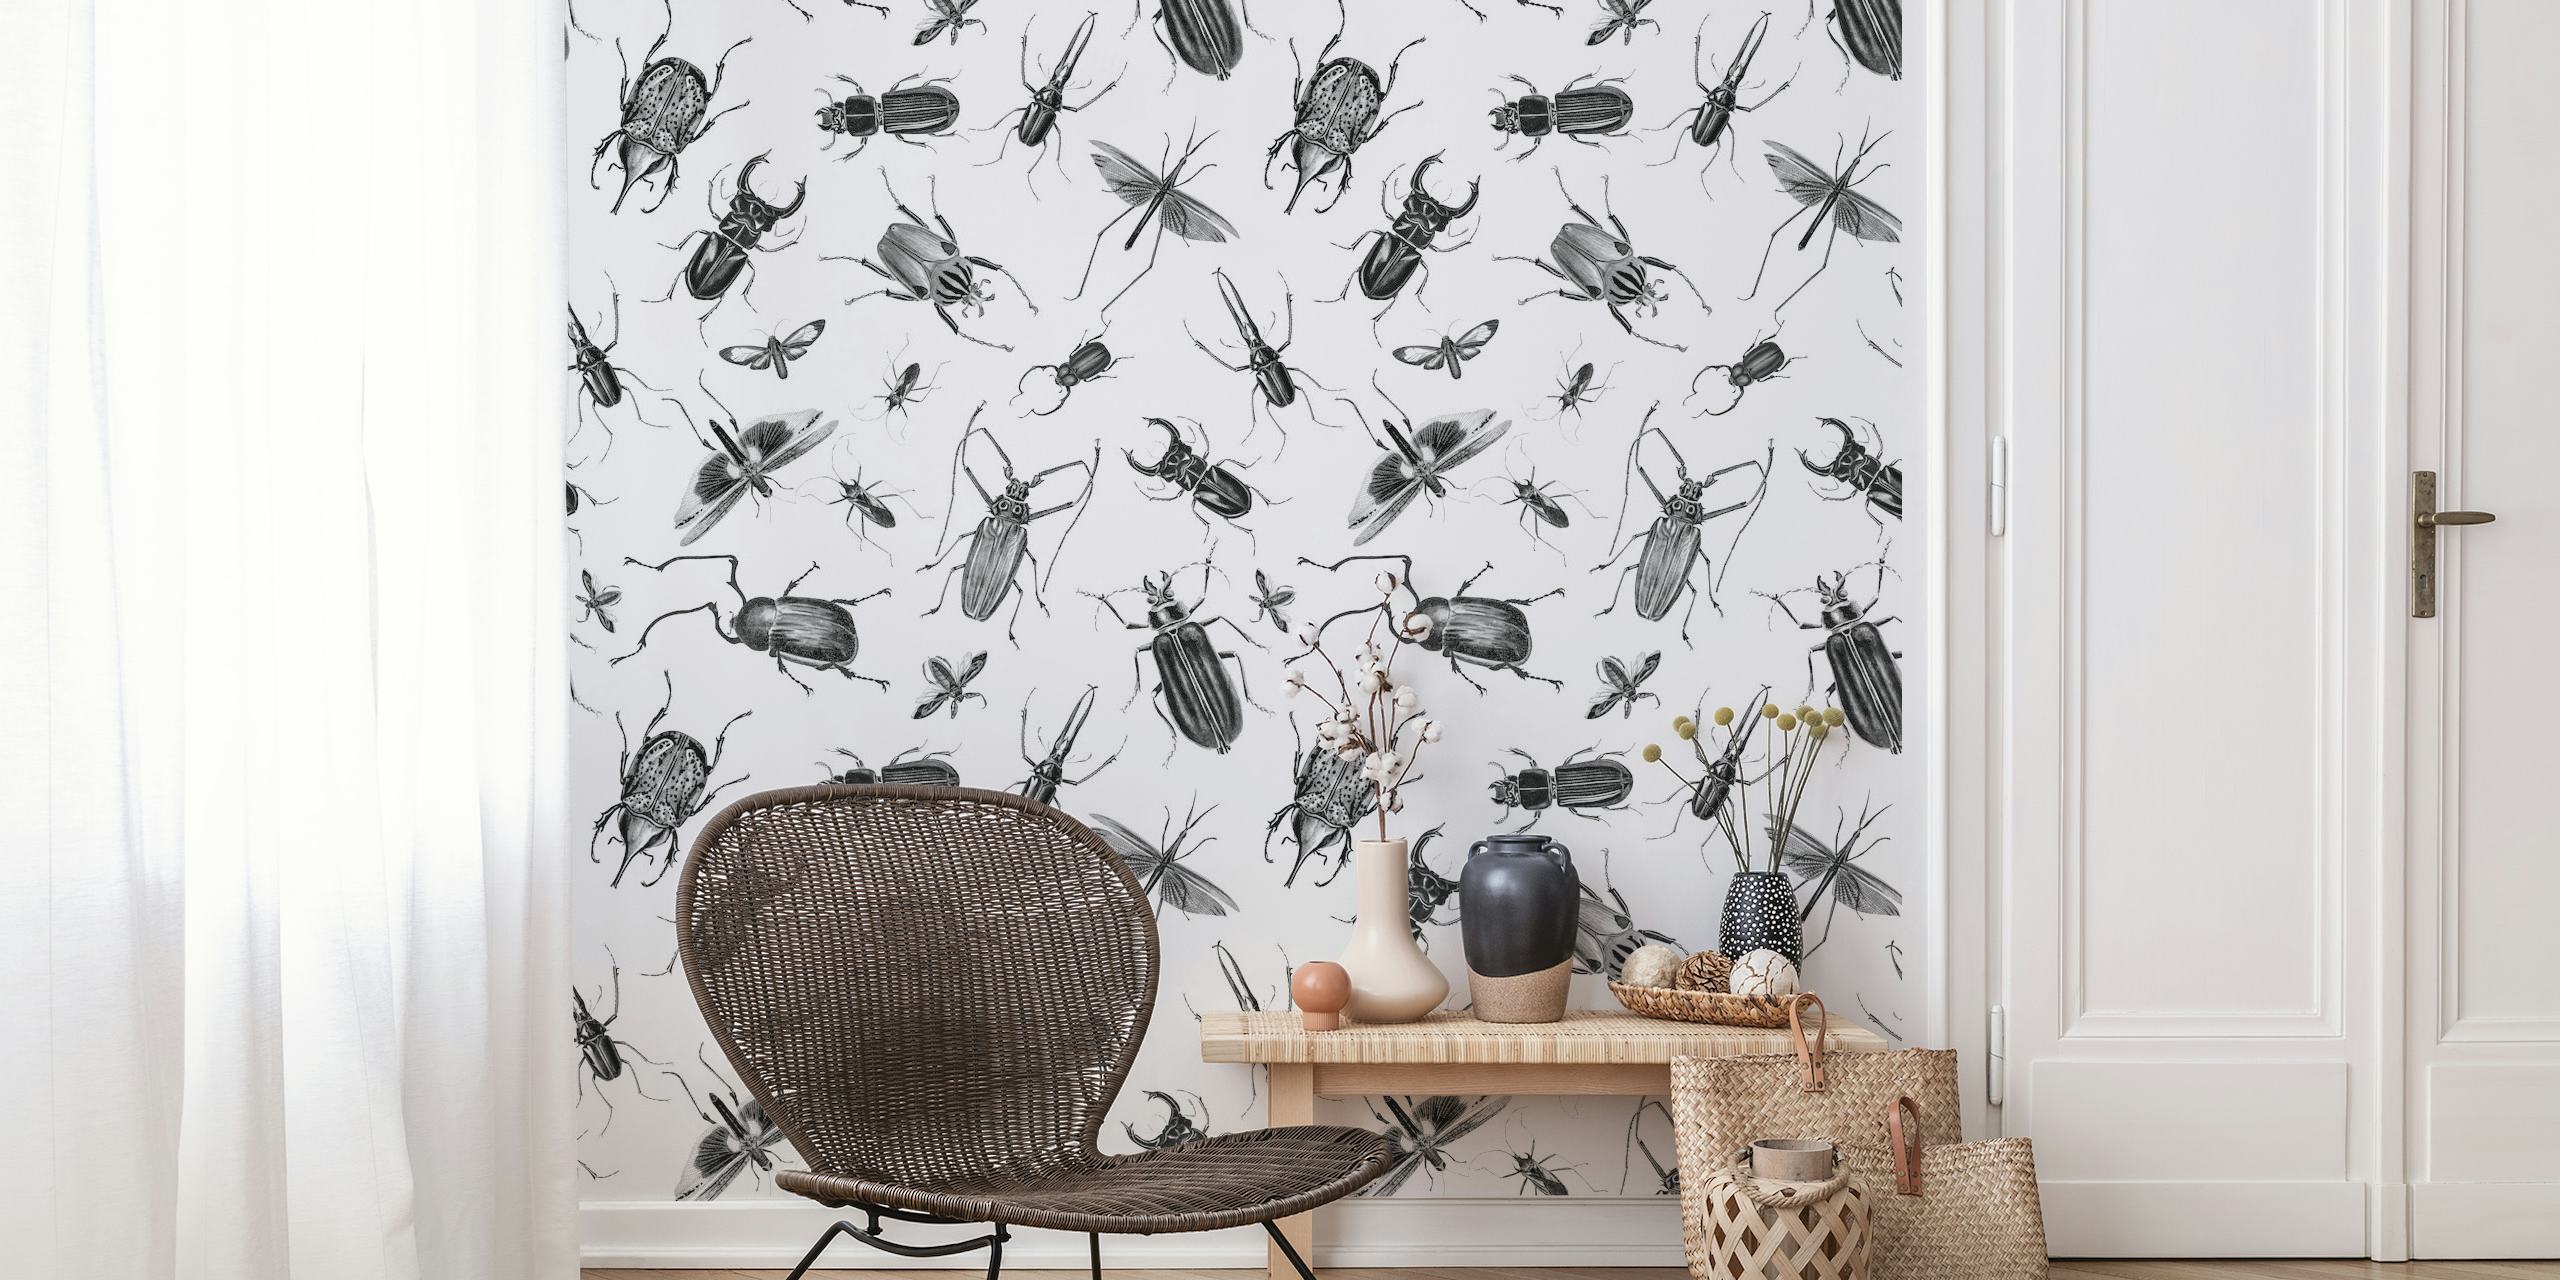 Vintage Beetles And Bugs wallpaper